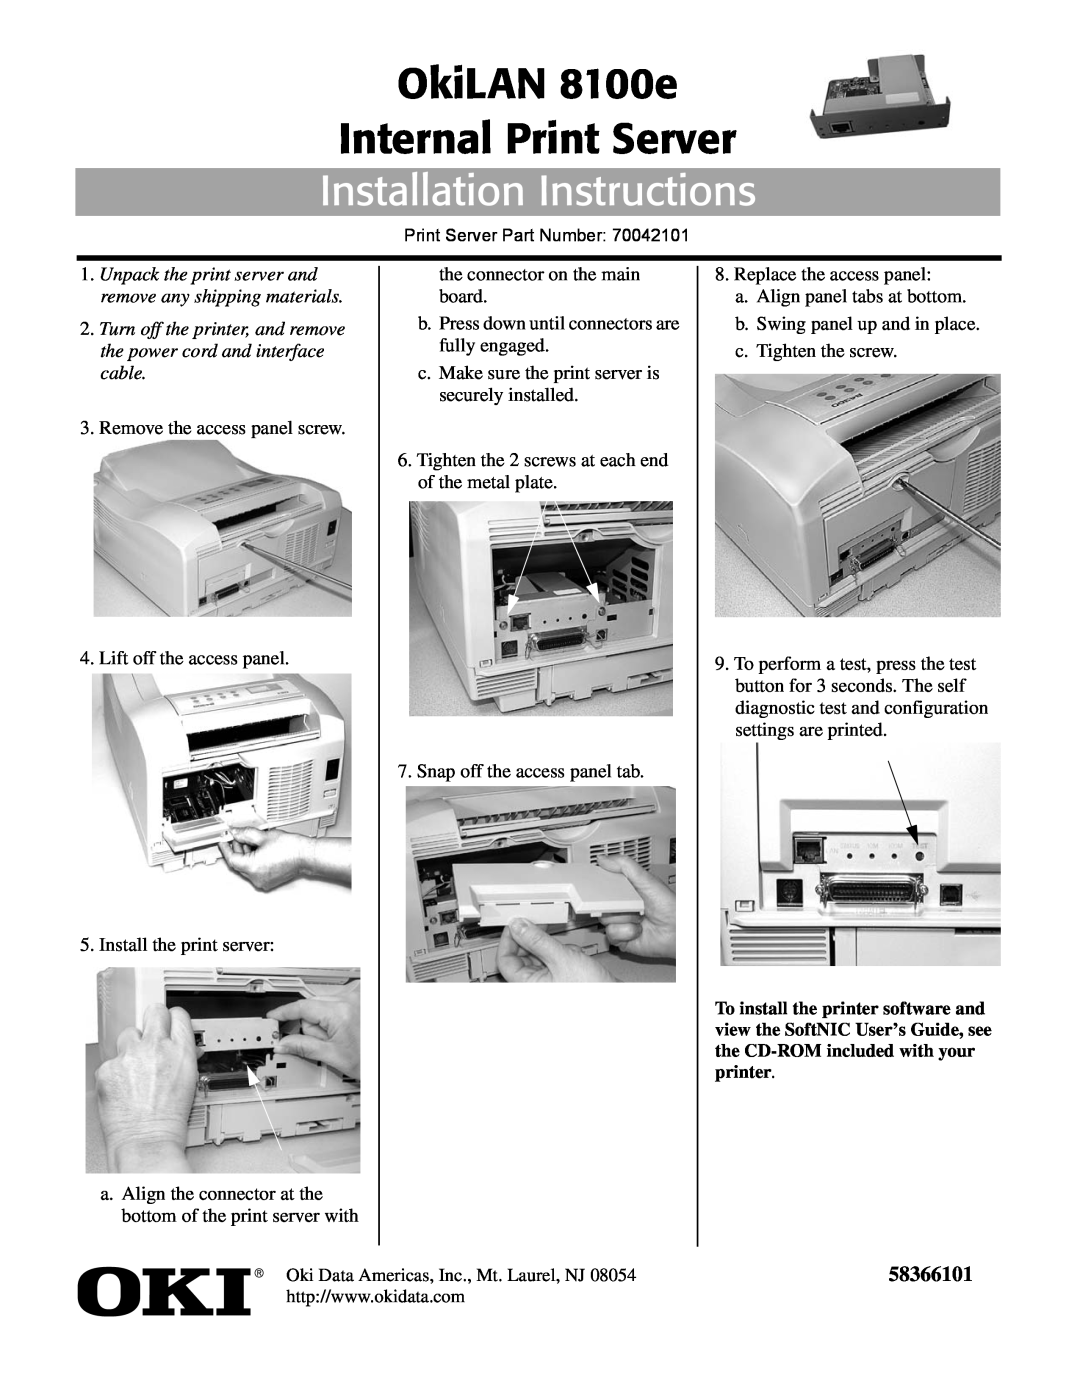 Oki installation instructions OkiLAN 8100e Internal Print Server, Installation Instructions, 58366101 